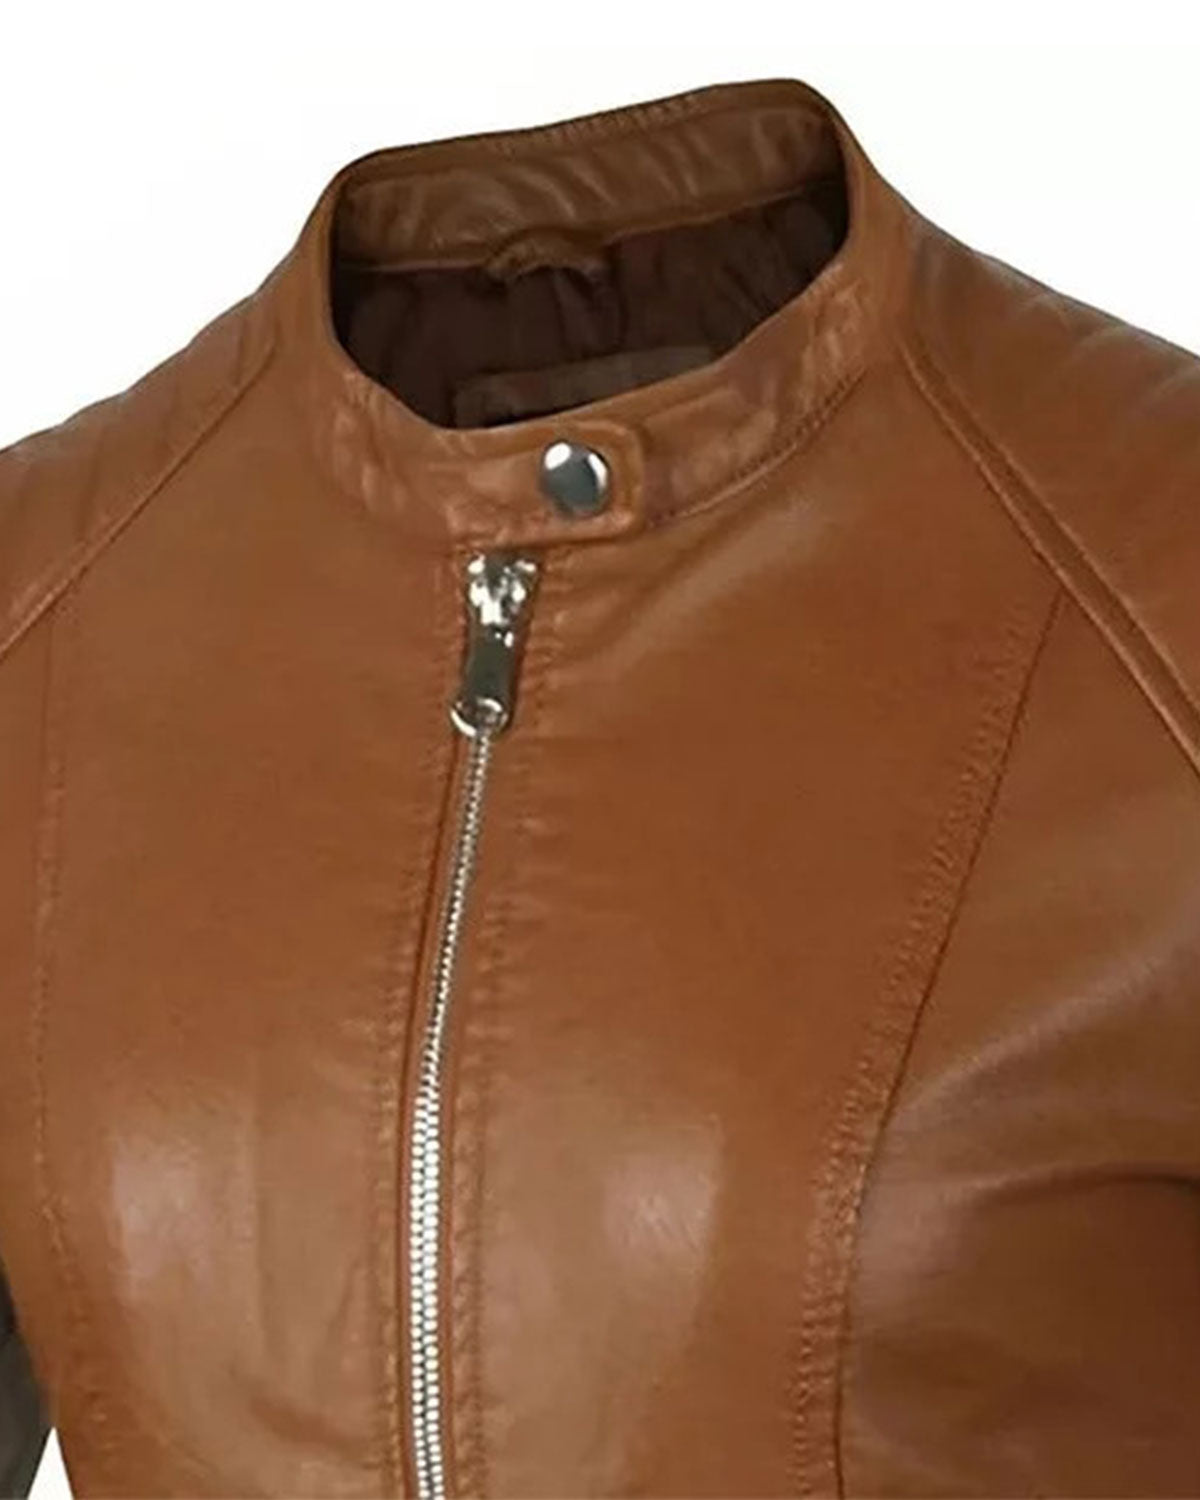 Womens Cognac Brown Cafe Racer Leather Jacket | Elite Jacket